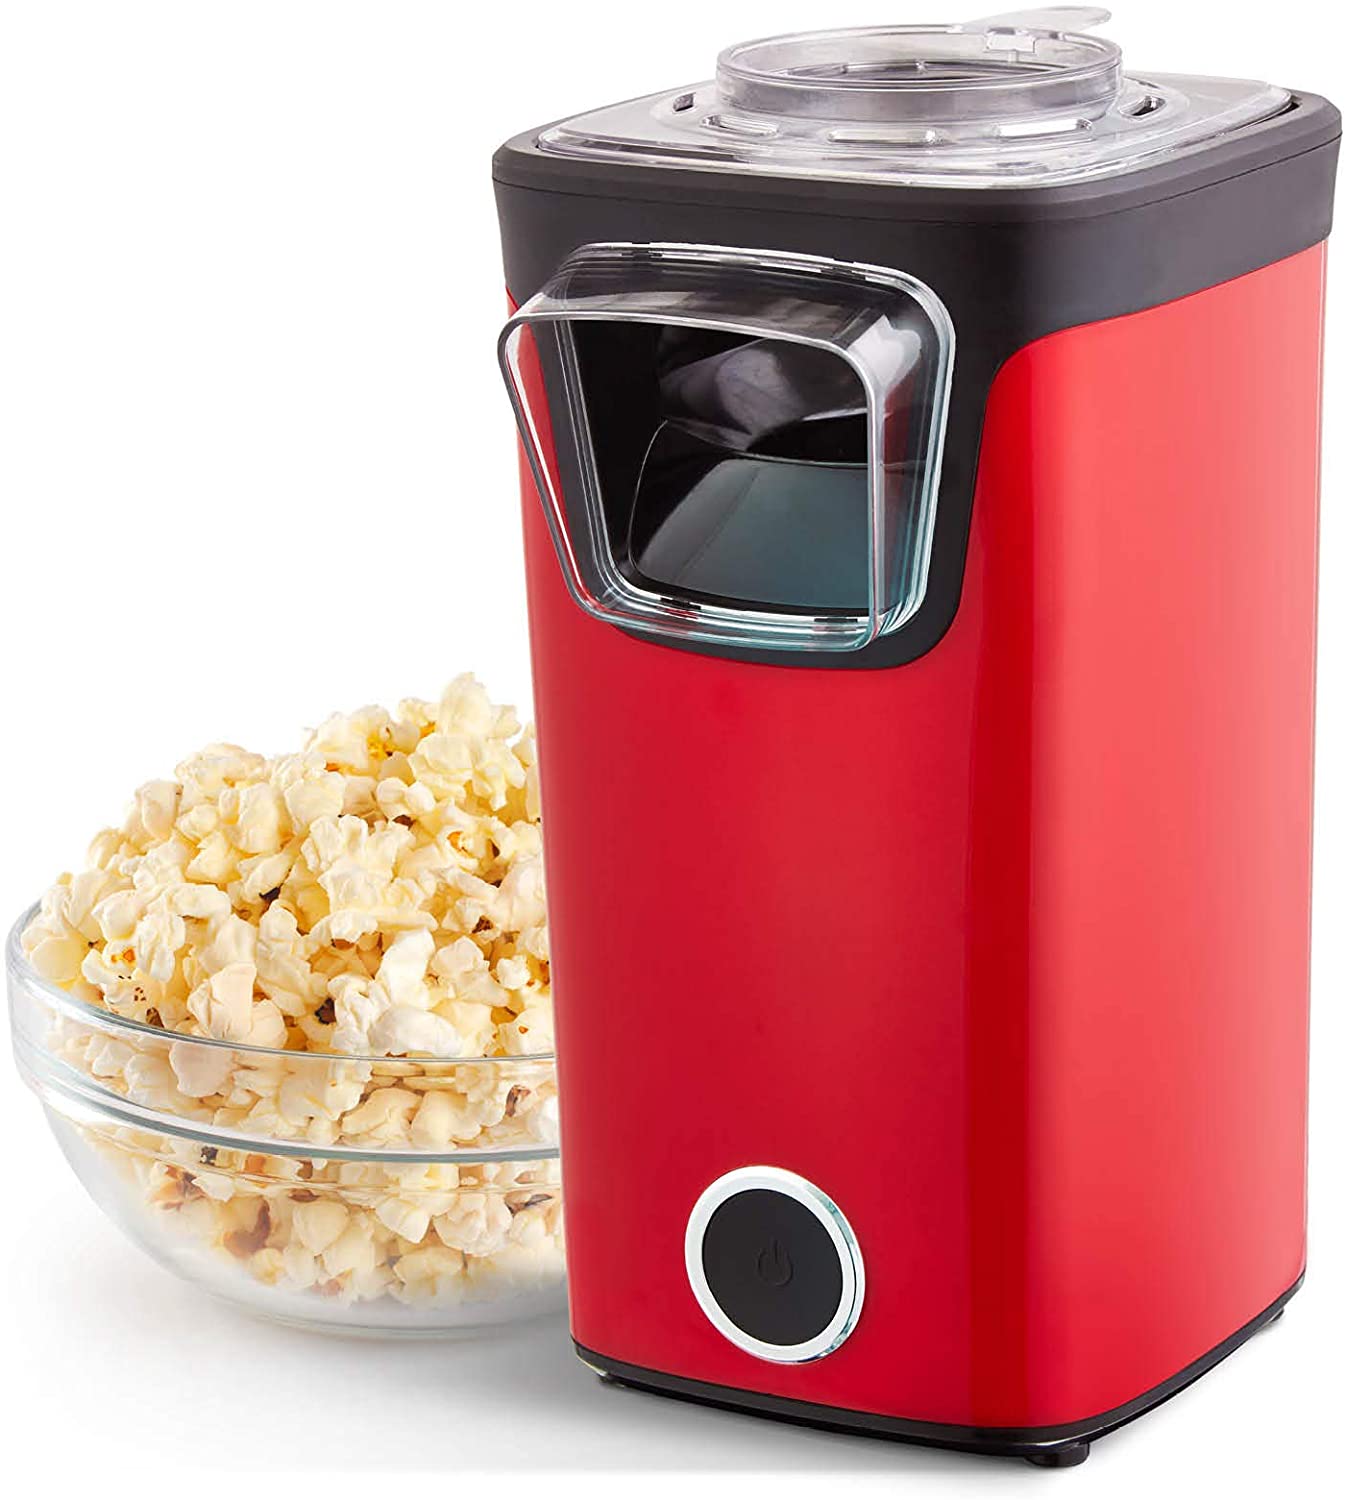 Dash Turbo Pop Popcorn Maker - Red DAPP155GBRD06 UPC  - DASH